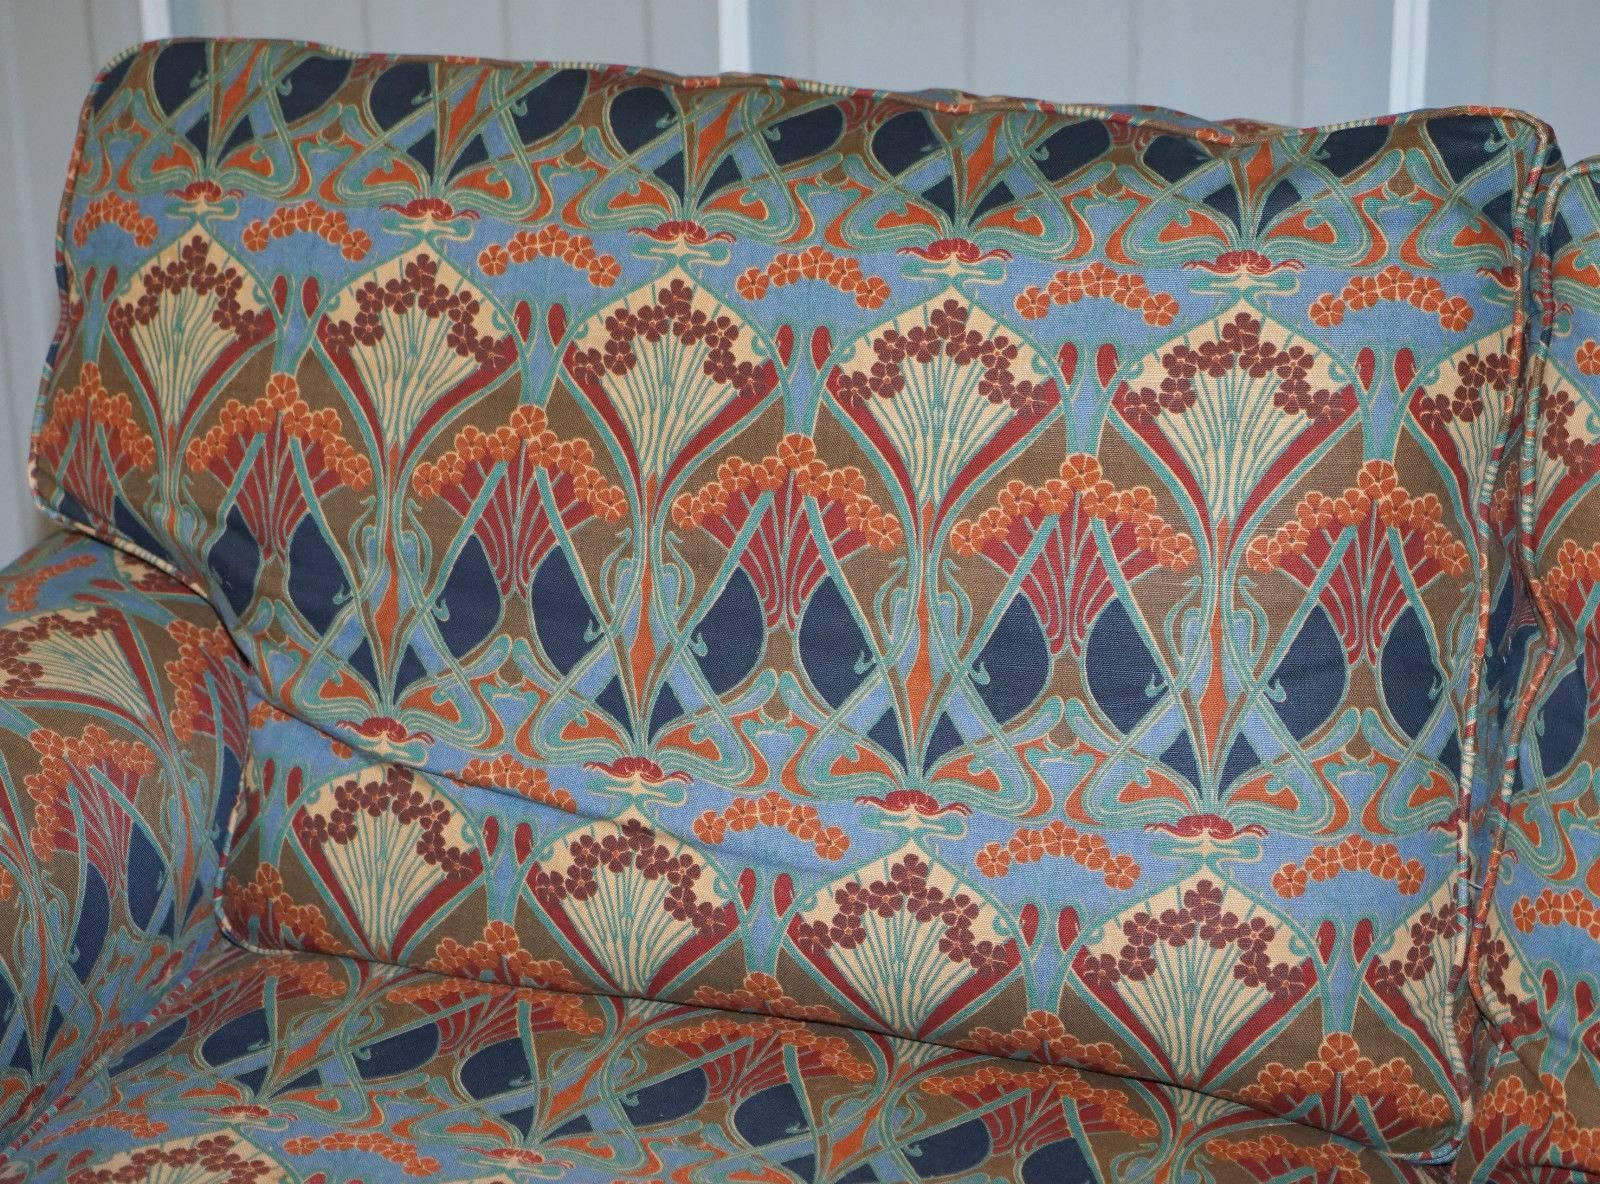 Hand-Carved Stunning Liberty London Classic English Sofa Ianthe Linen Union Fabric Rare Find